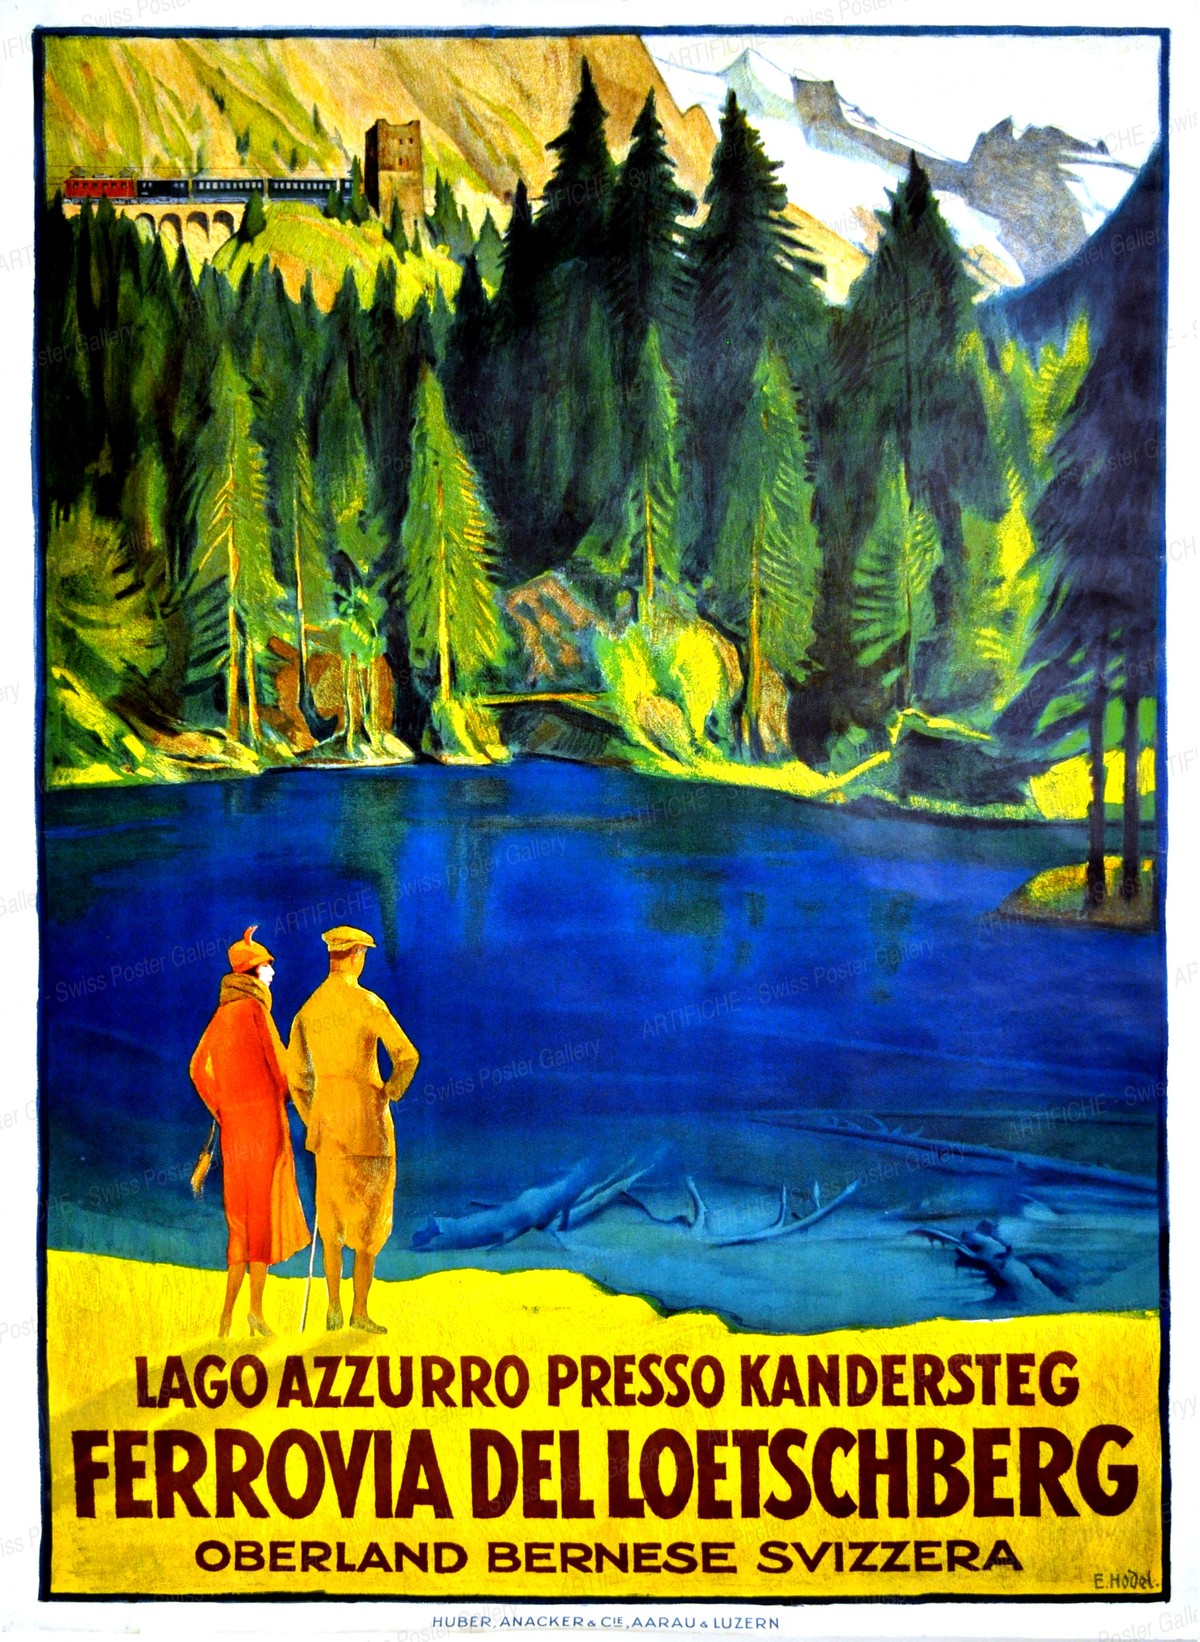 Lago azzurro presso Kandersteg – Ferrovia del Loetschberg – Oberland Bernese Svizzera, Ernst Hodel